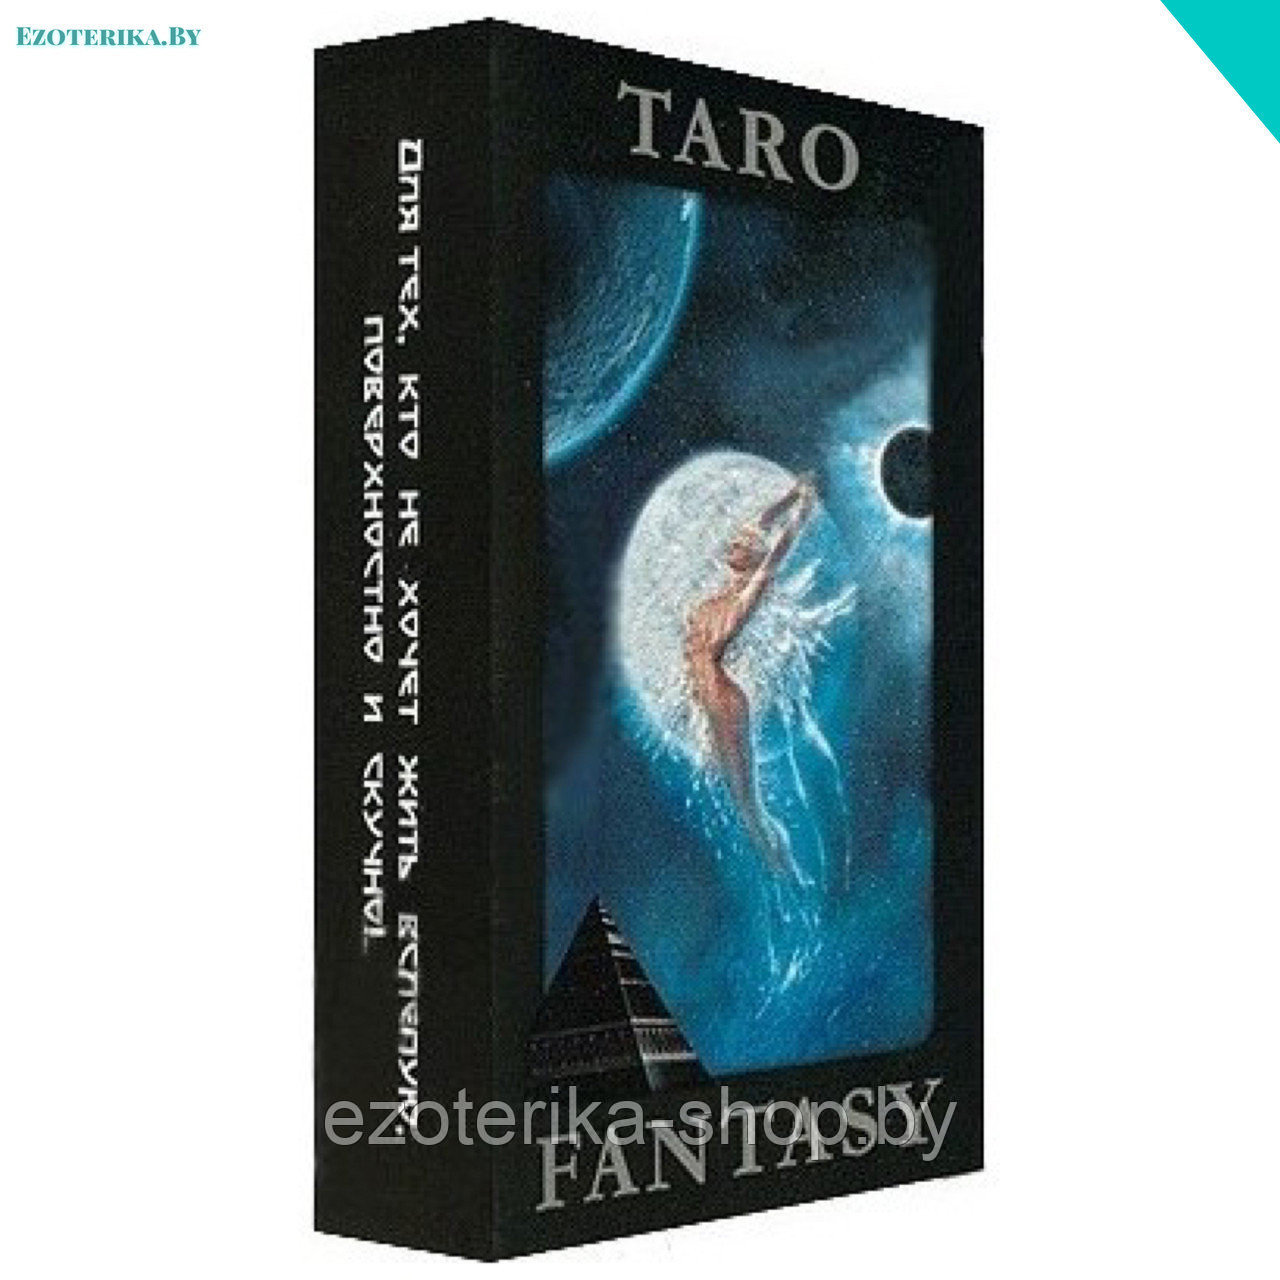 Таро фэнтези (Fantasy Tarot)